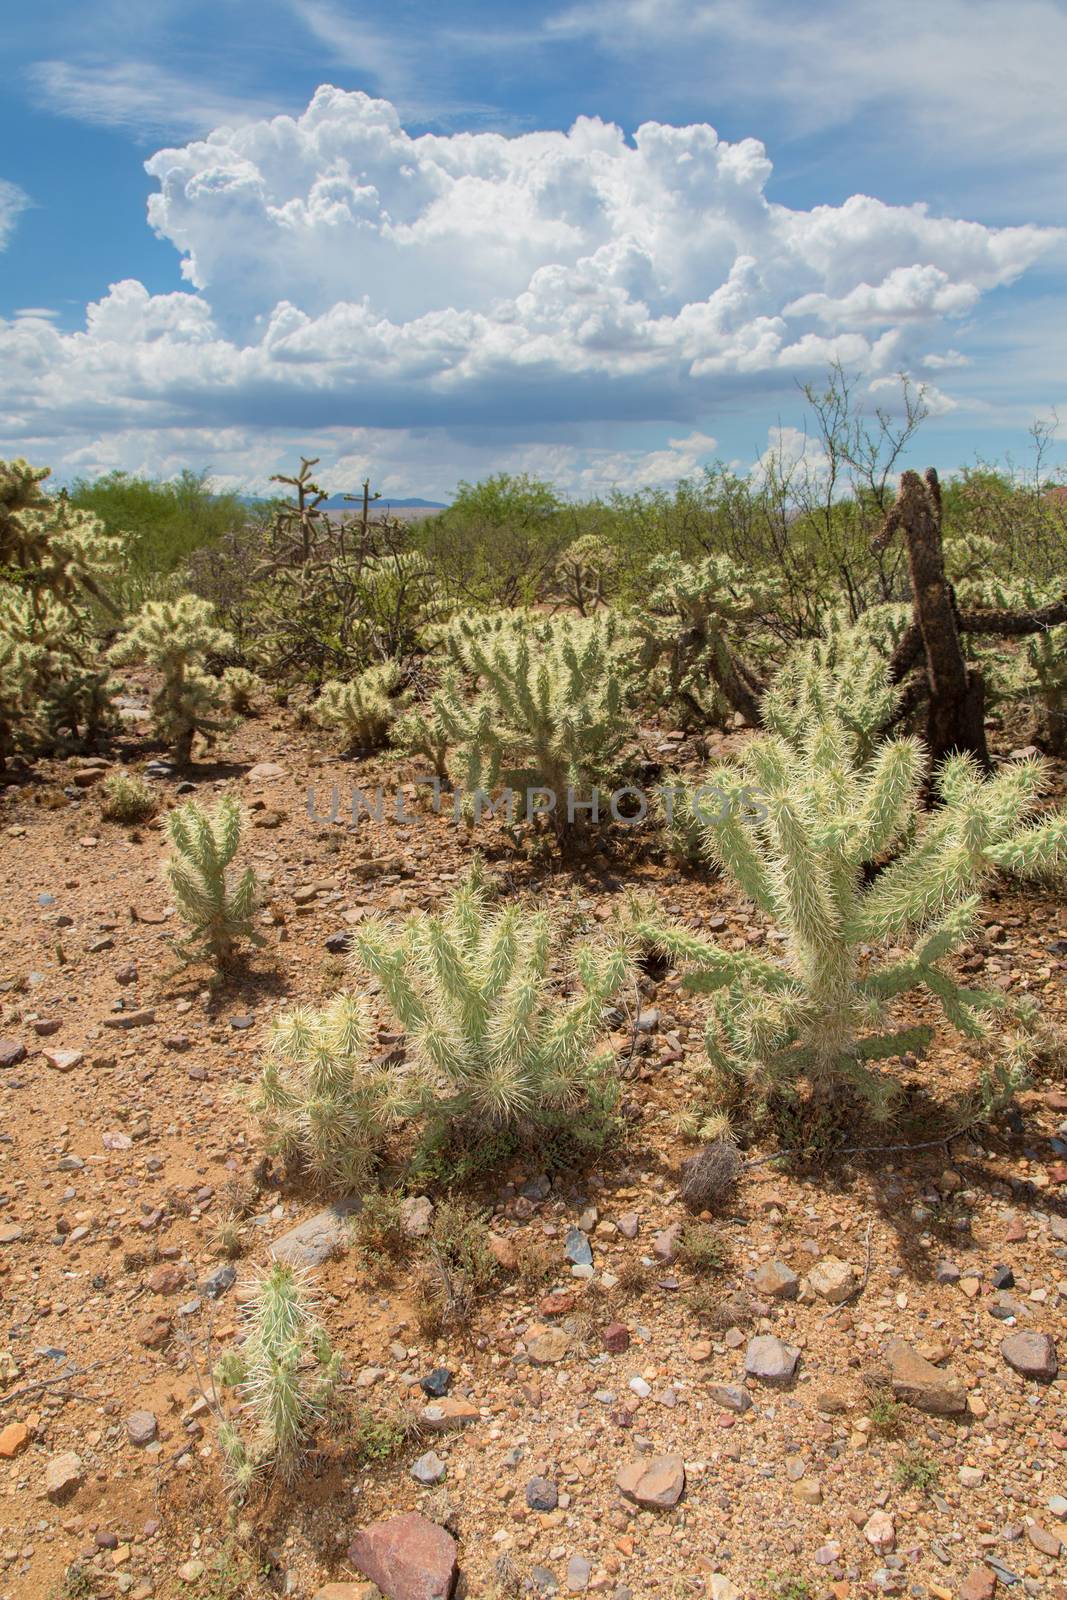 Cactus plants in desert during monsoon season